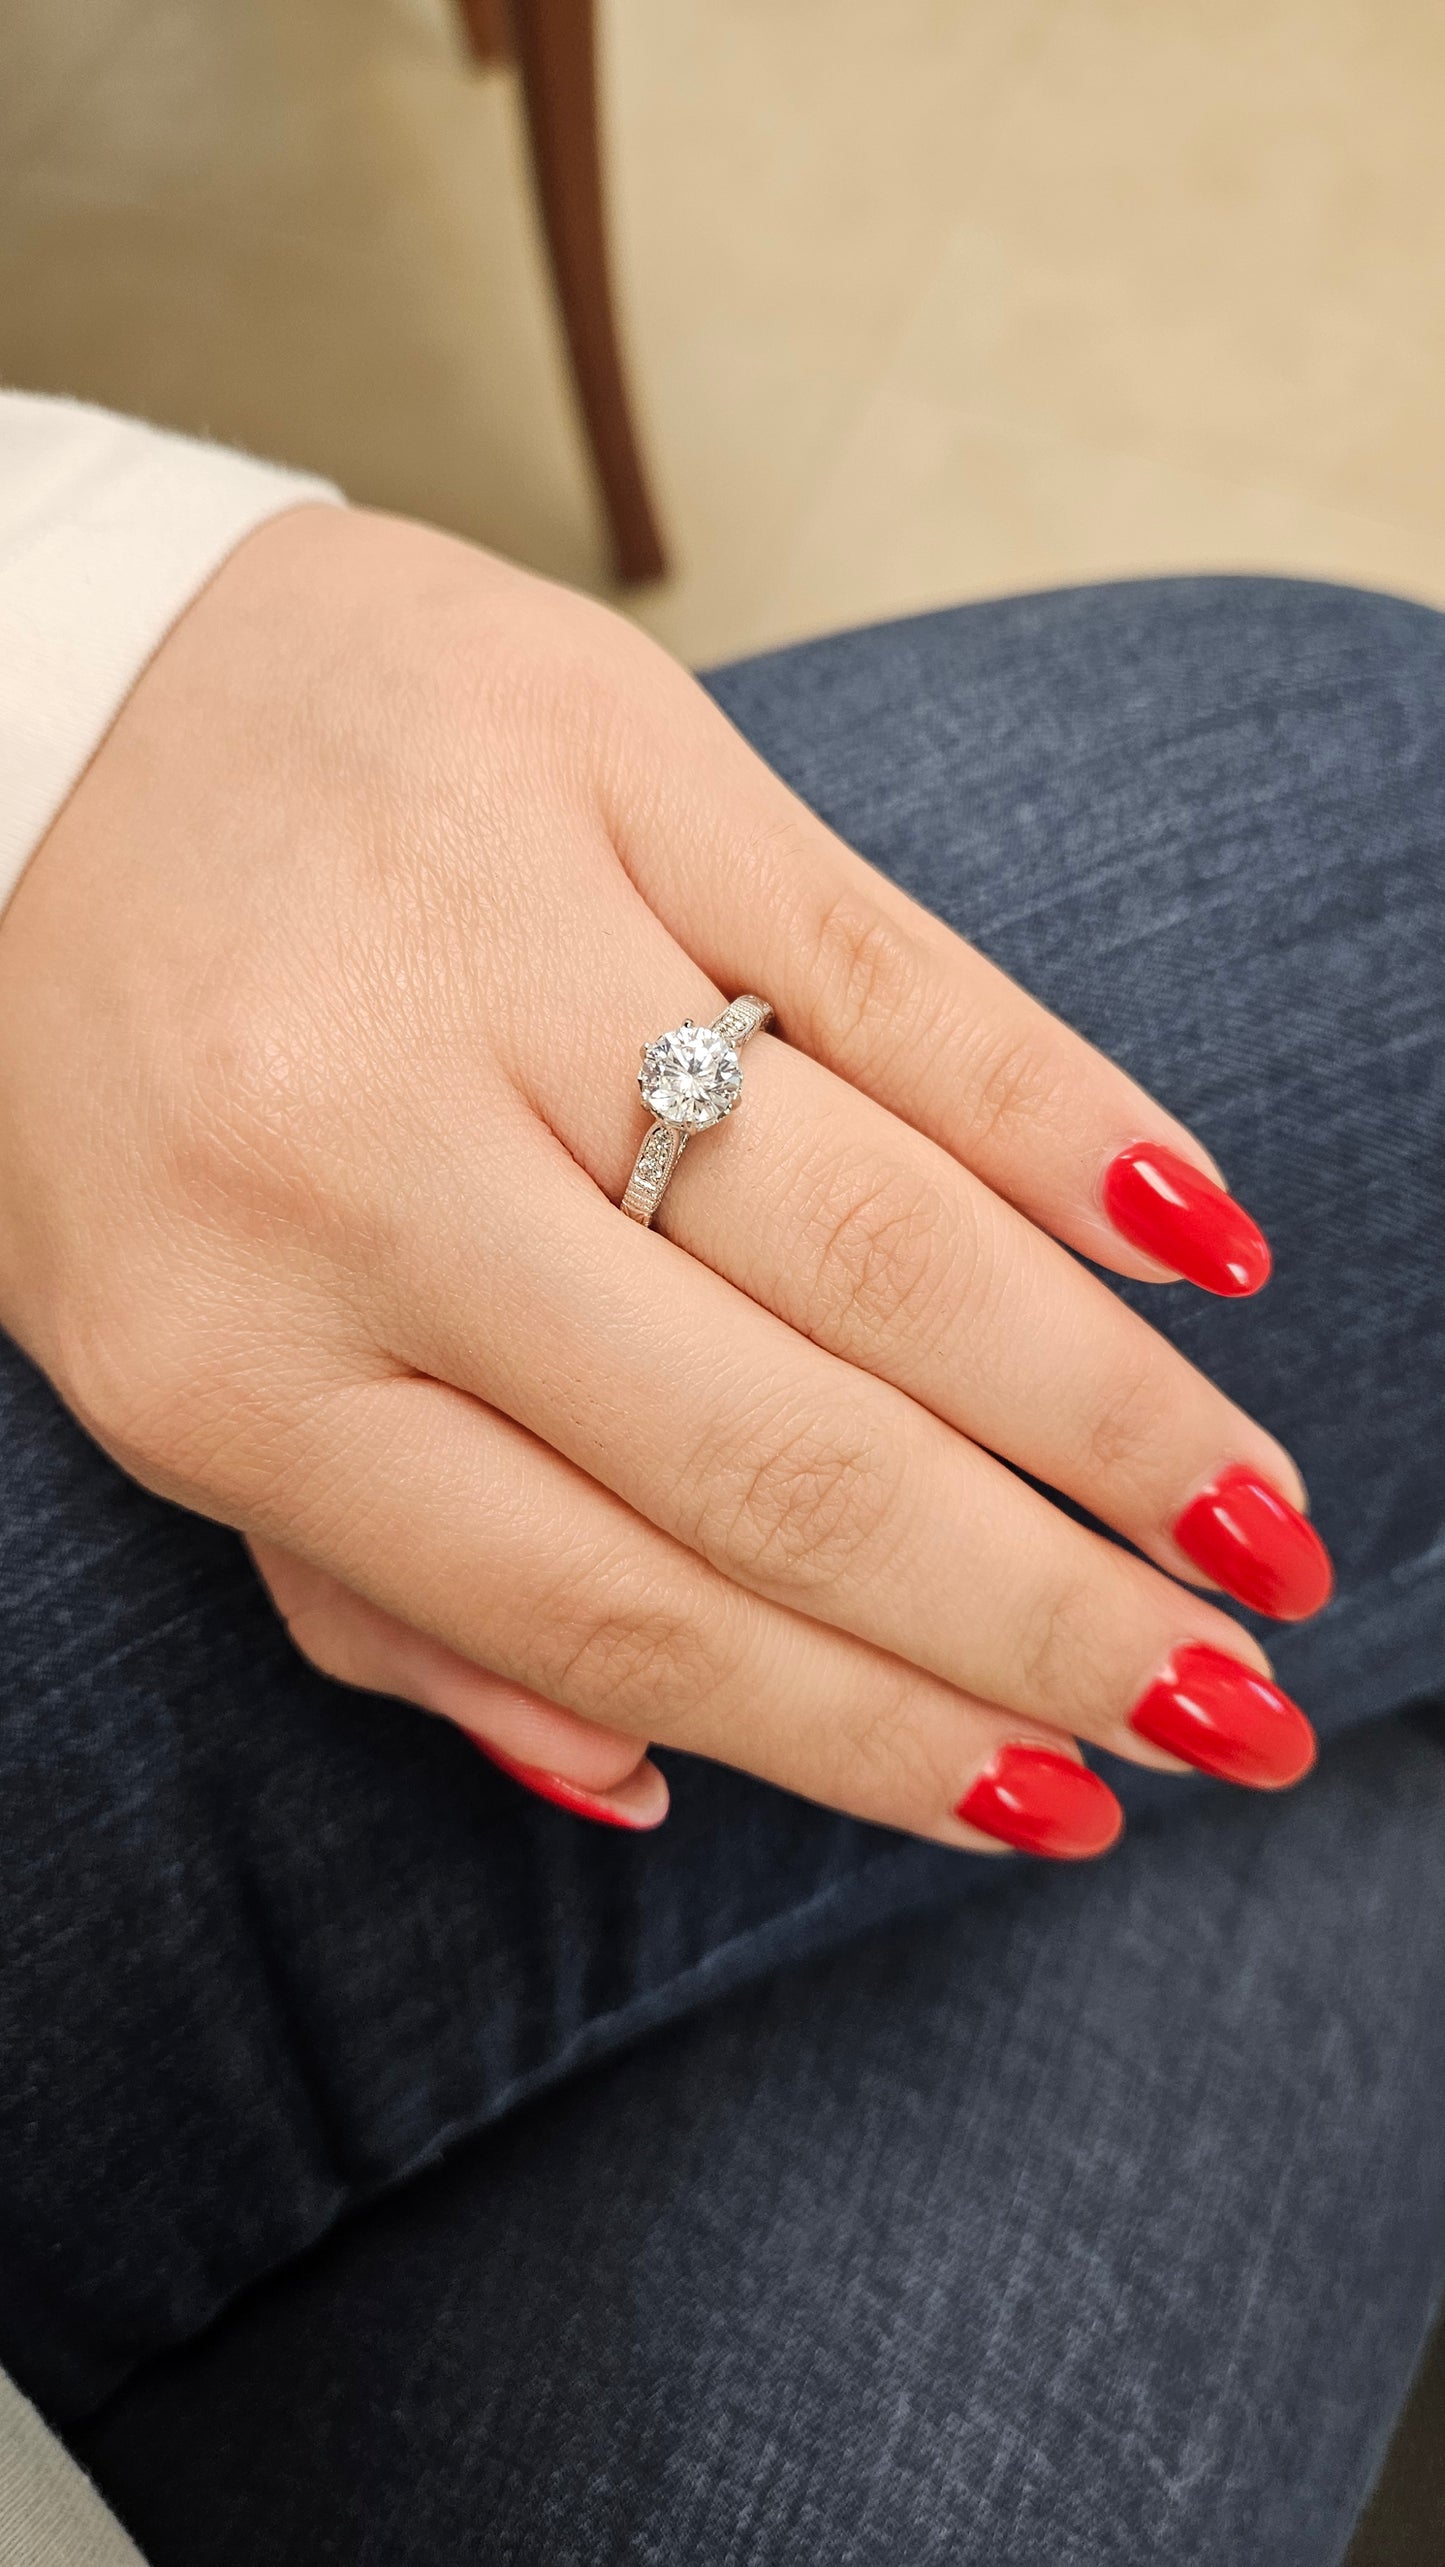 Tulipan Vintage Style Diamond Engagement Ring 18K White Gold